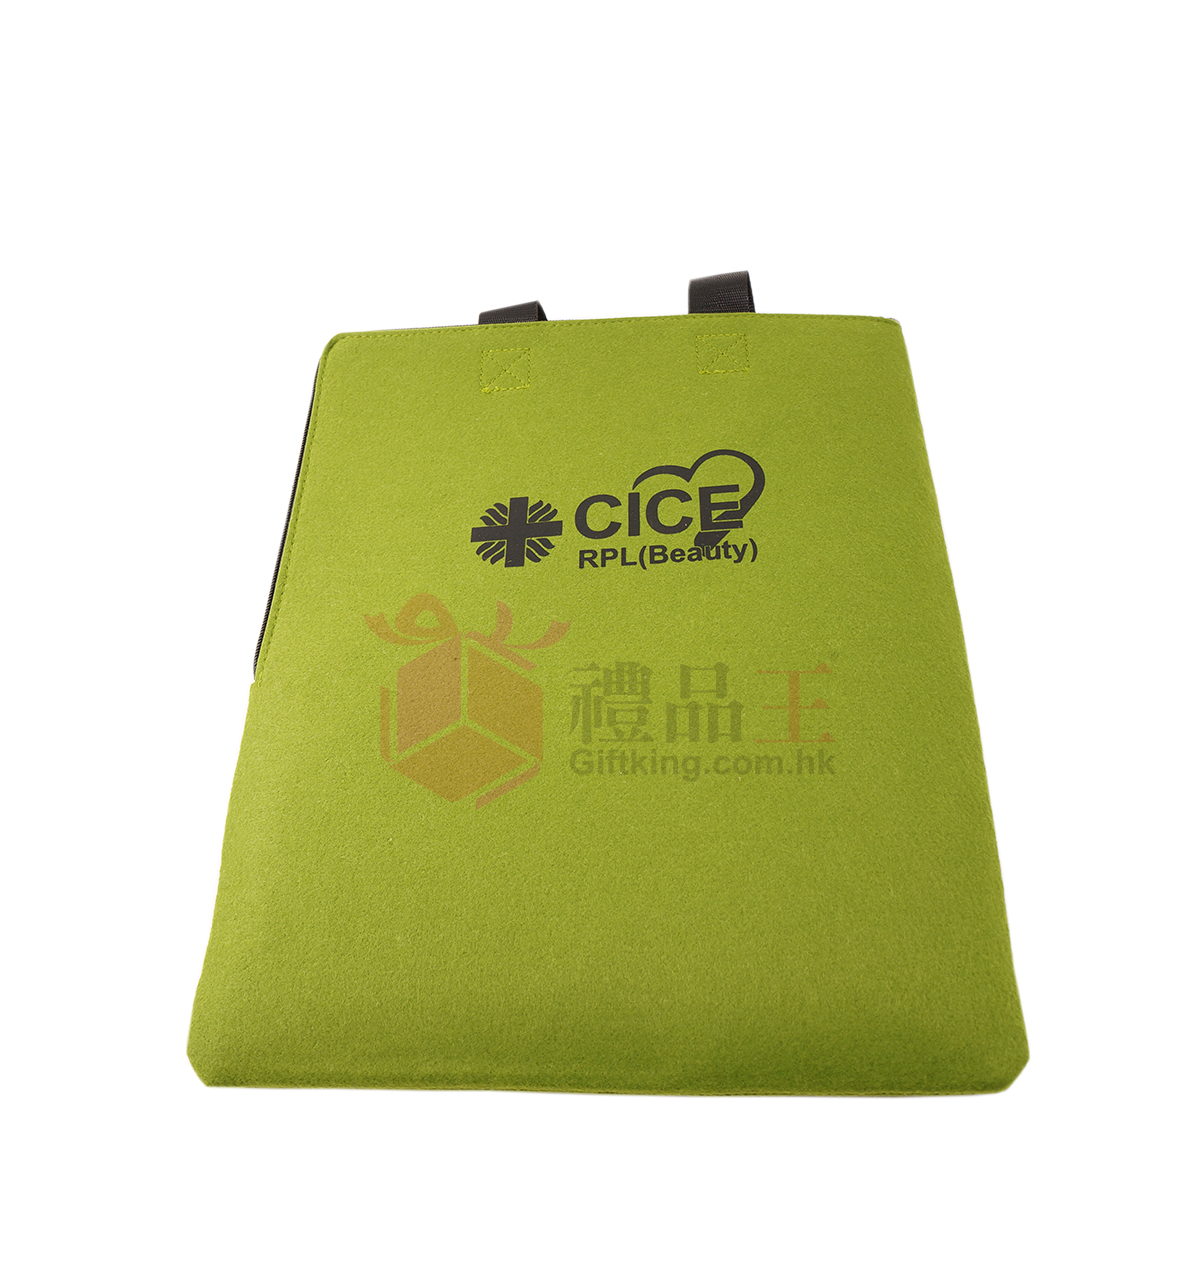 CICE Felt A4 File Bag (Stationery Gift)